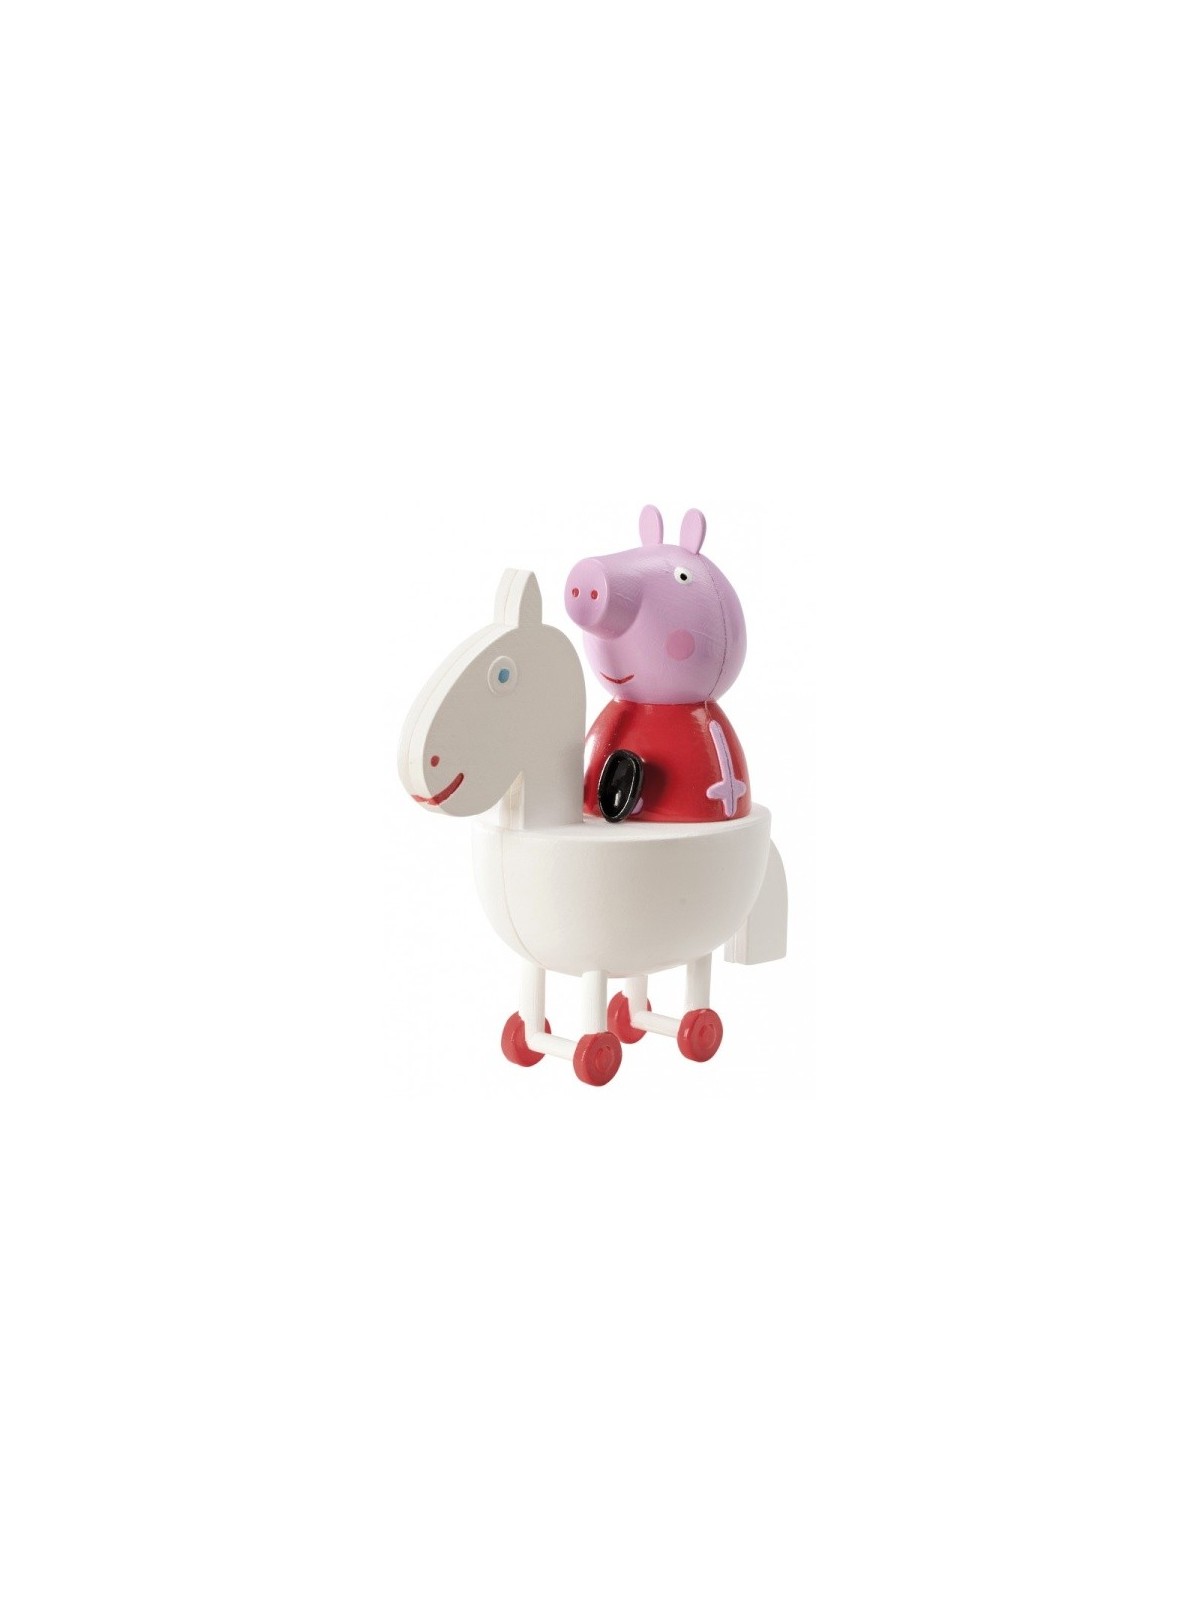 DeKora - Set of decorative figurine - Peppa Pig + Carousel